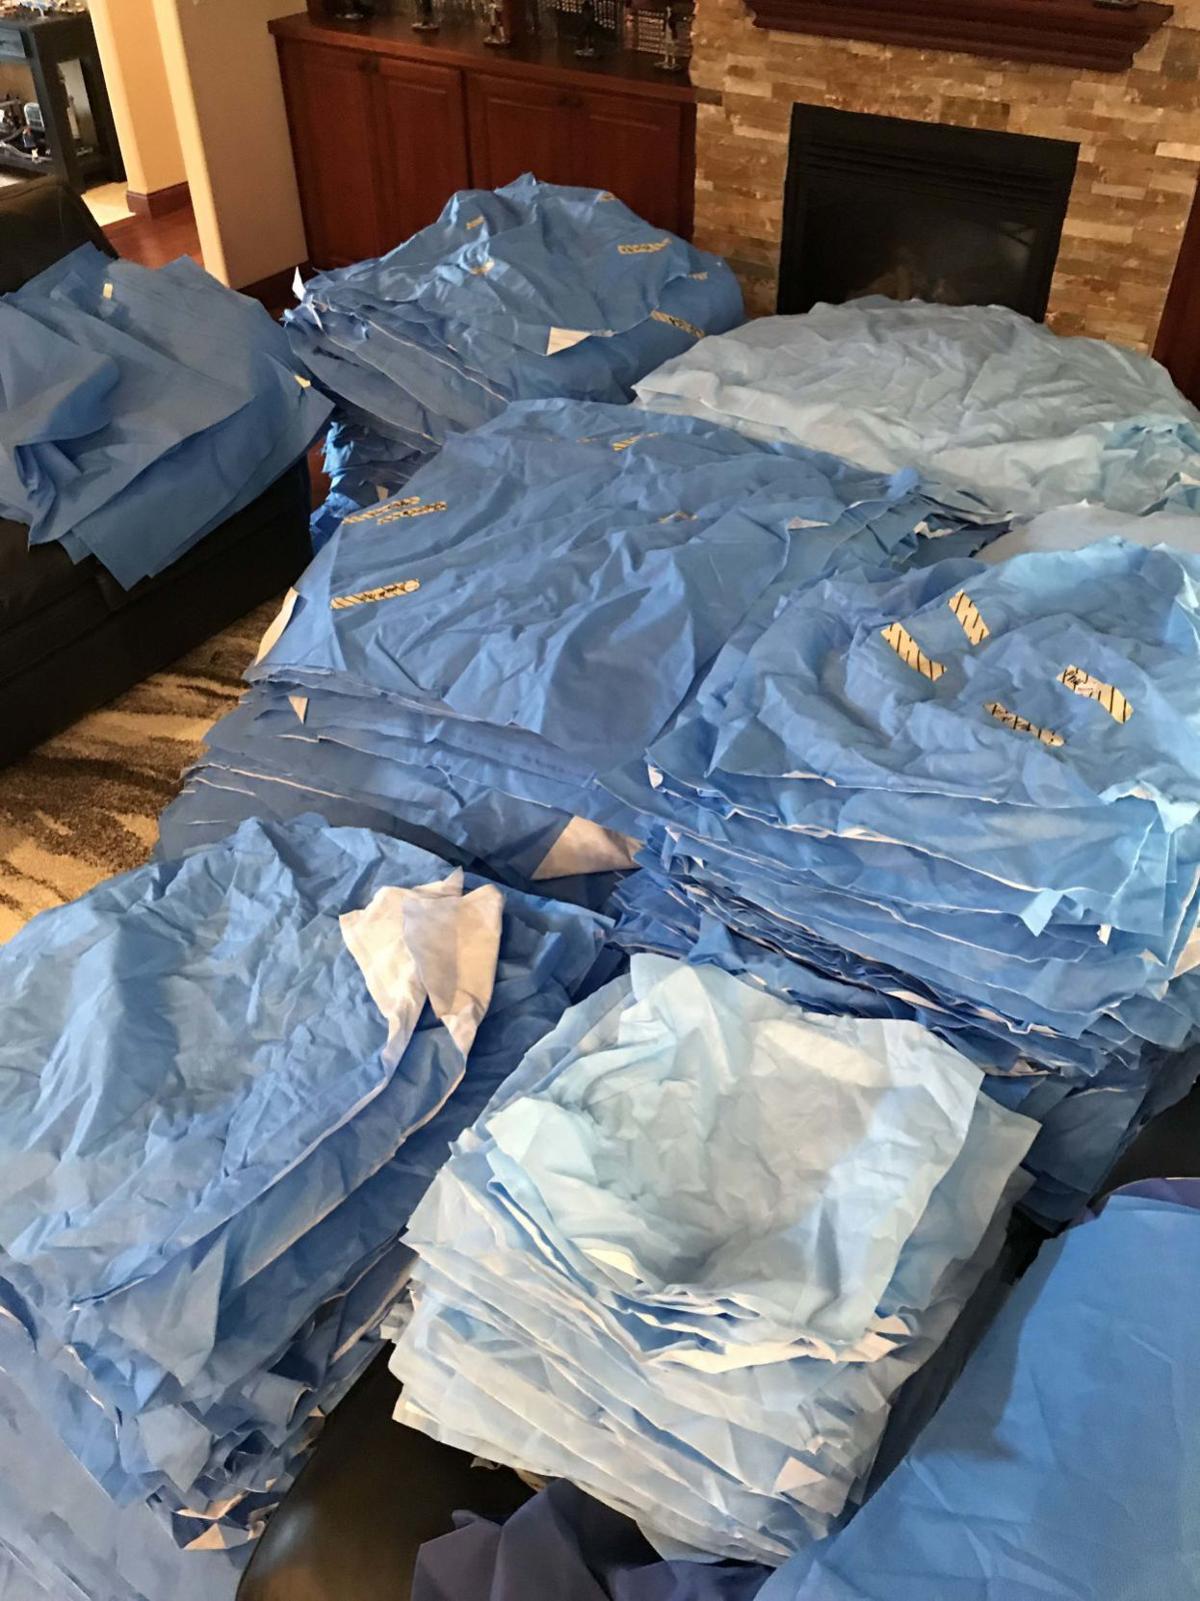 MercyOne team turns hospital materials into sleeping bags